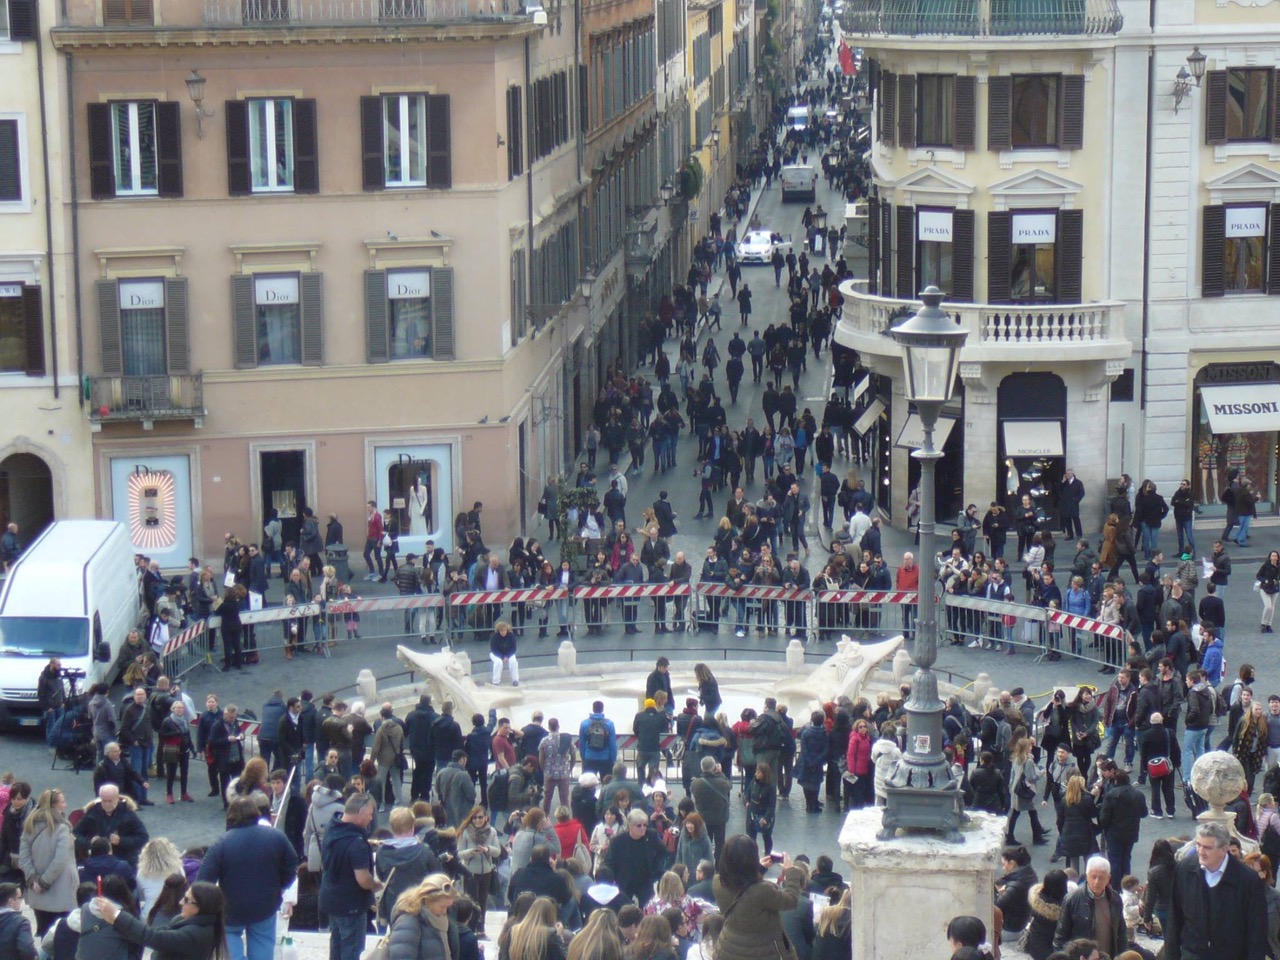 Dutch Soccer Hooligans Damage Historic Bernini Fountain in Rome